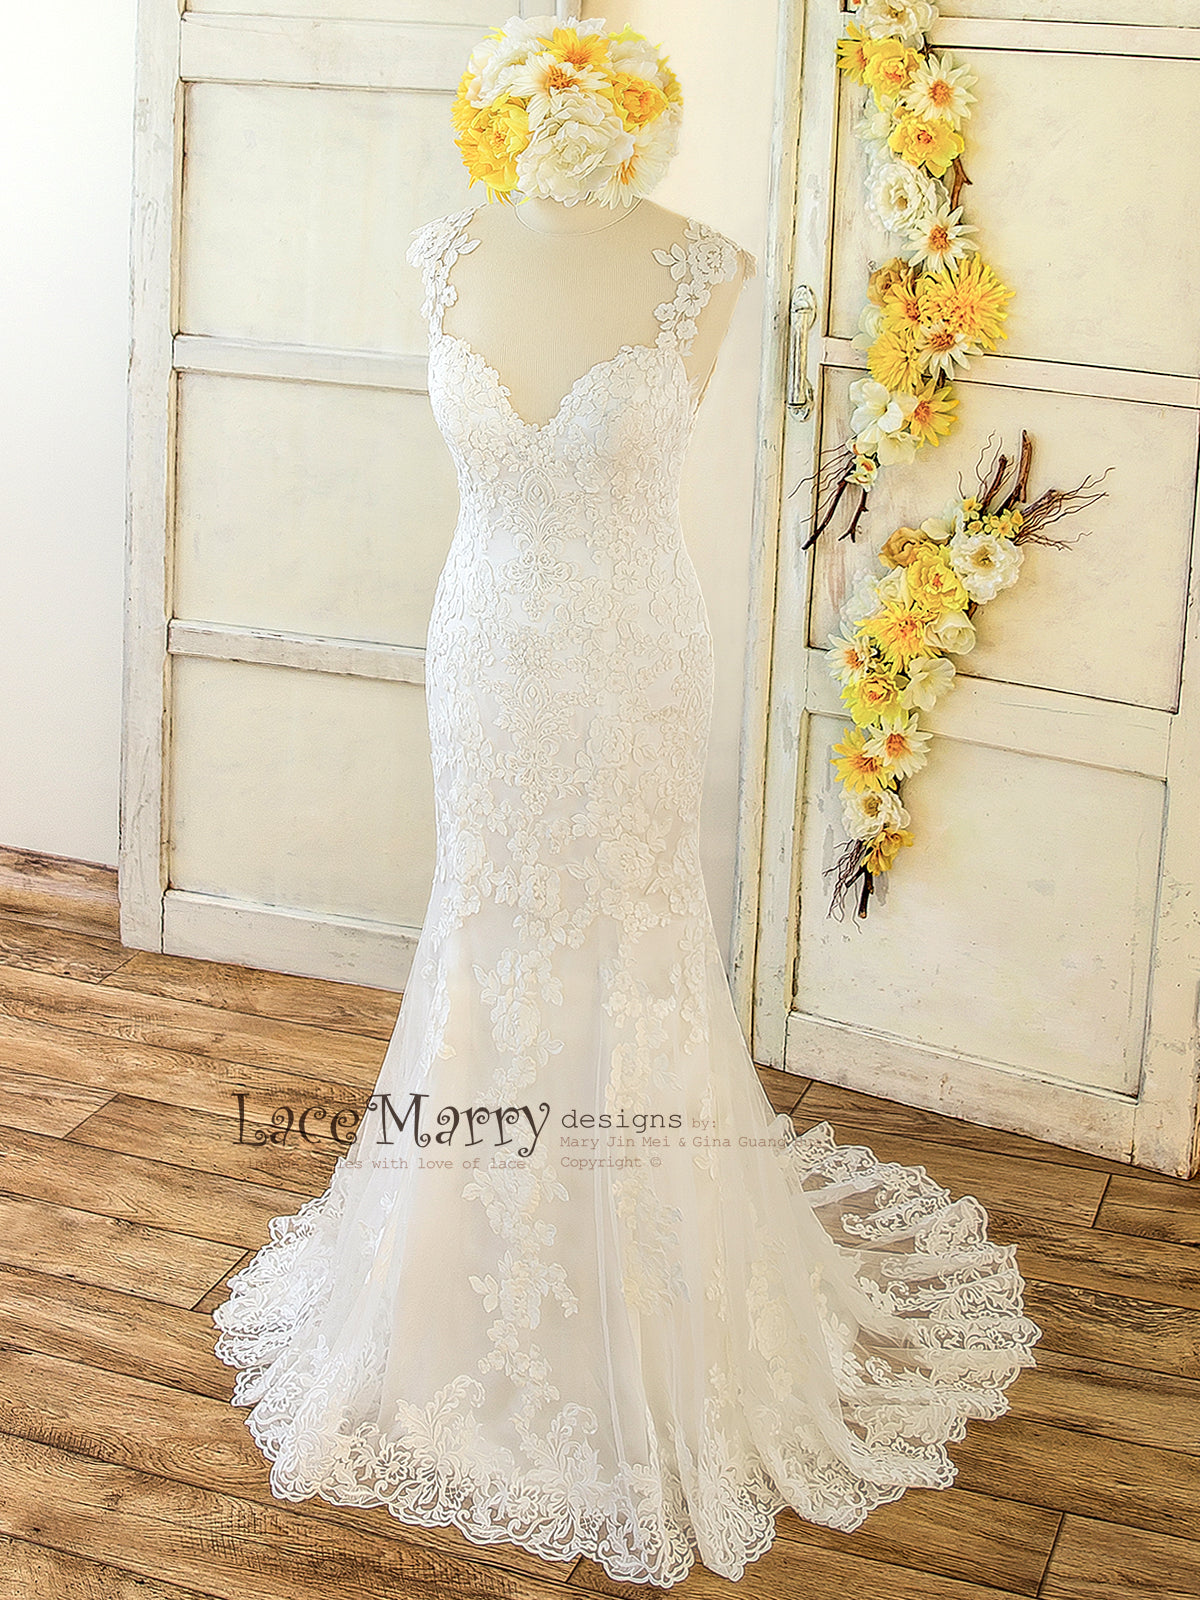 Beautiful Lace Applique Ivory Wedding Dress